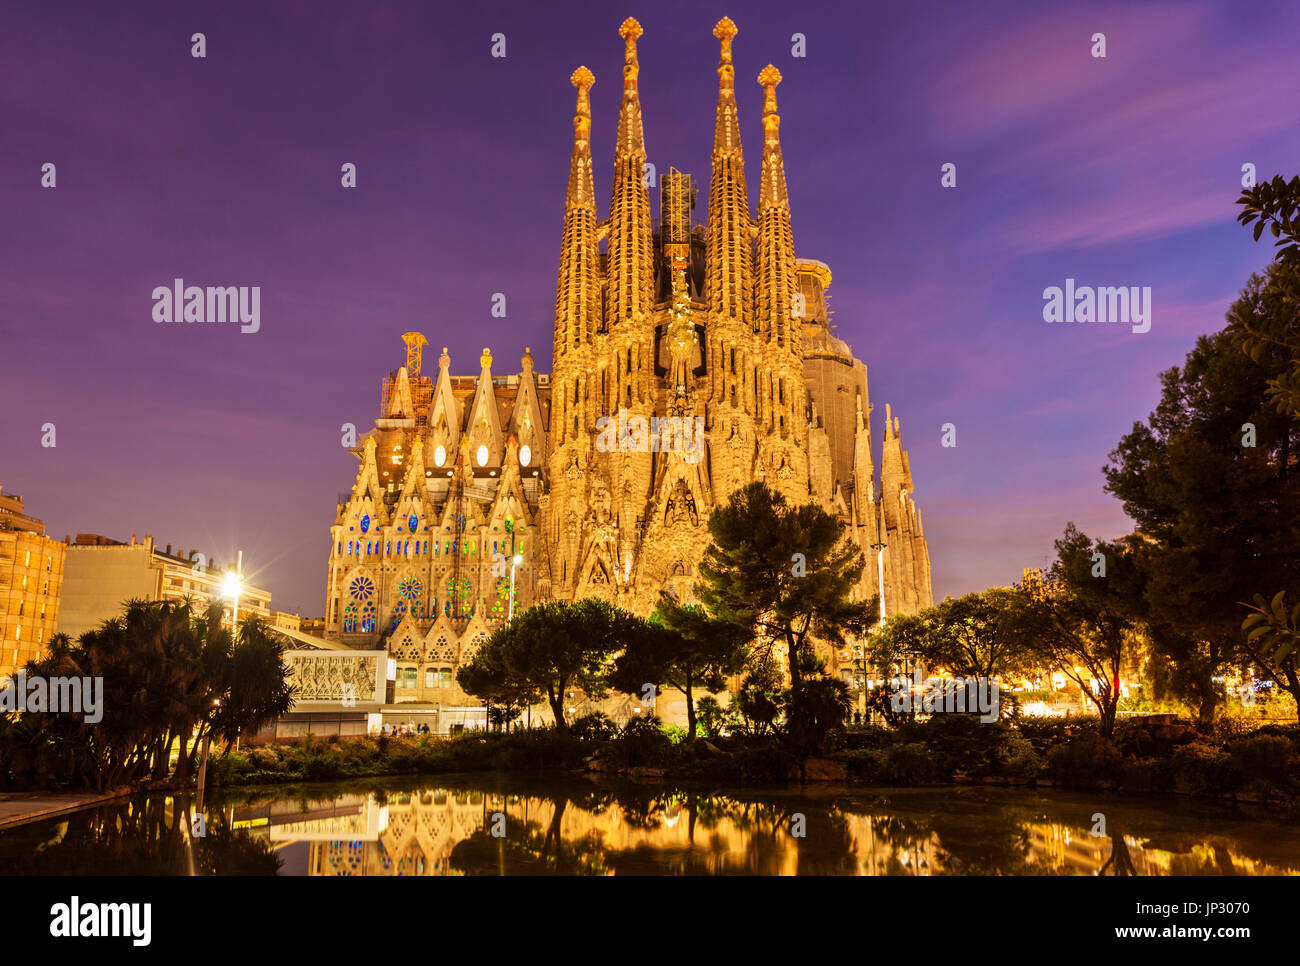 España Barcelona España Barcelona Antoni Gaudí, La Sagrada Familia Barcelona la catedral de la Sagrada Familia de Barcelona cataluña catalunya España Europa ue Foto de stock